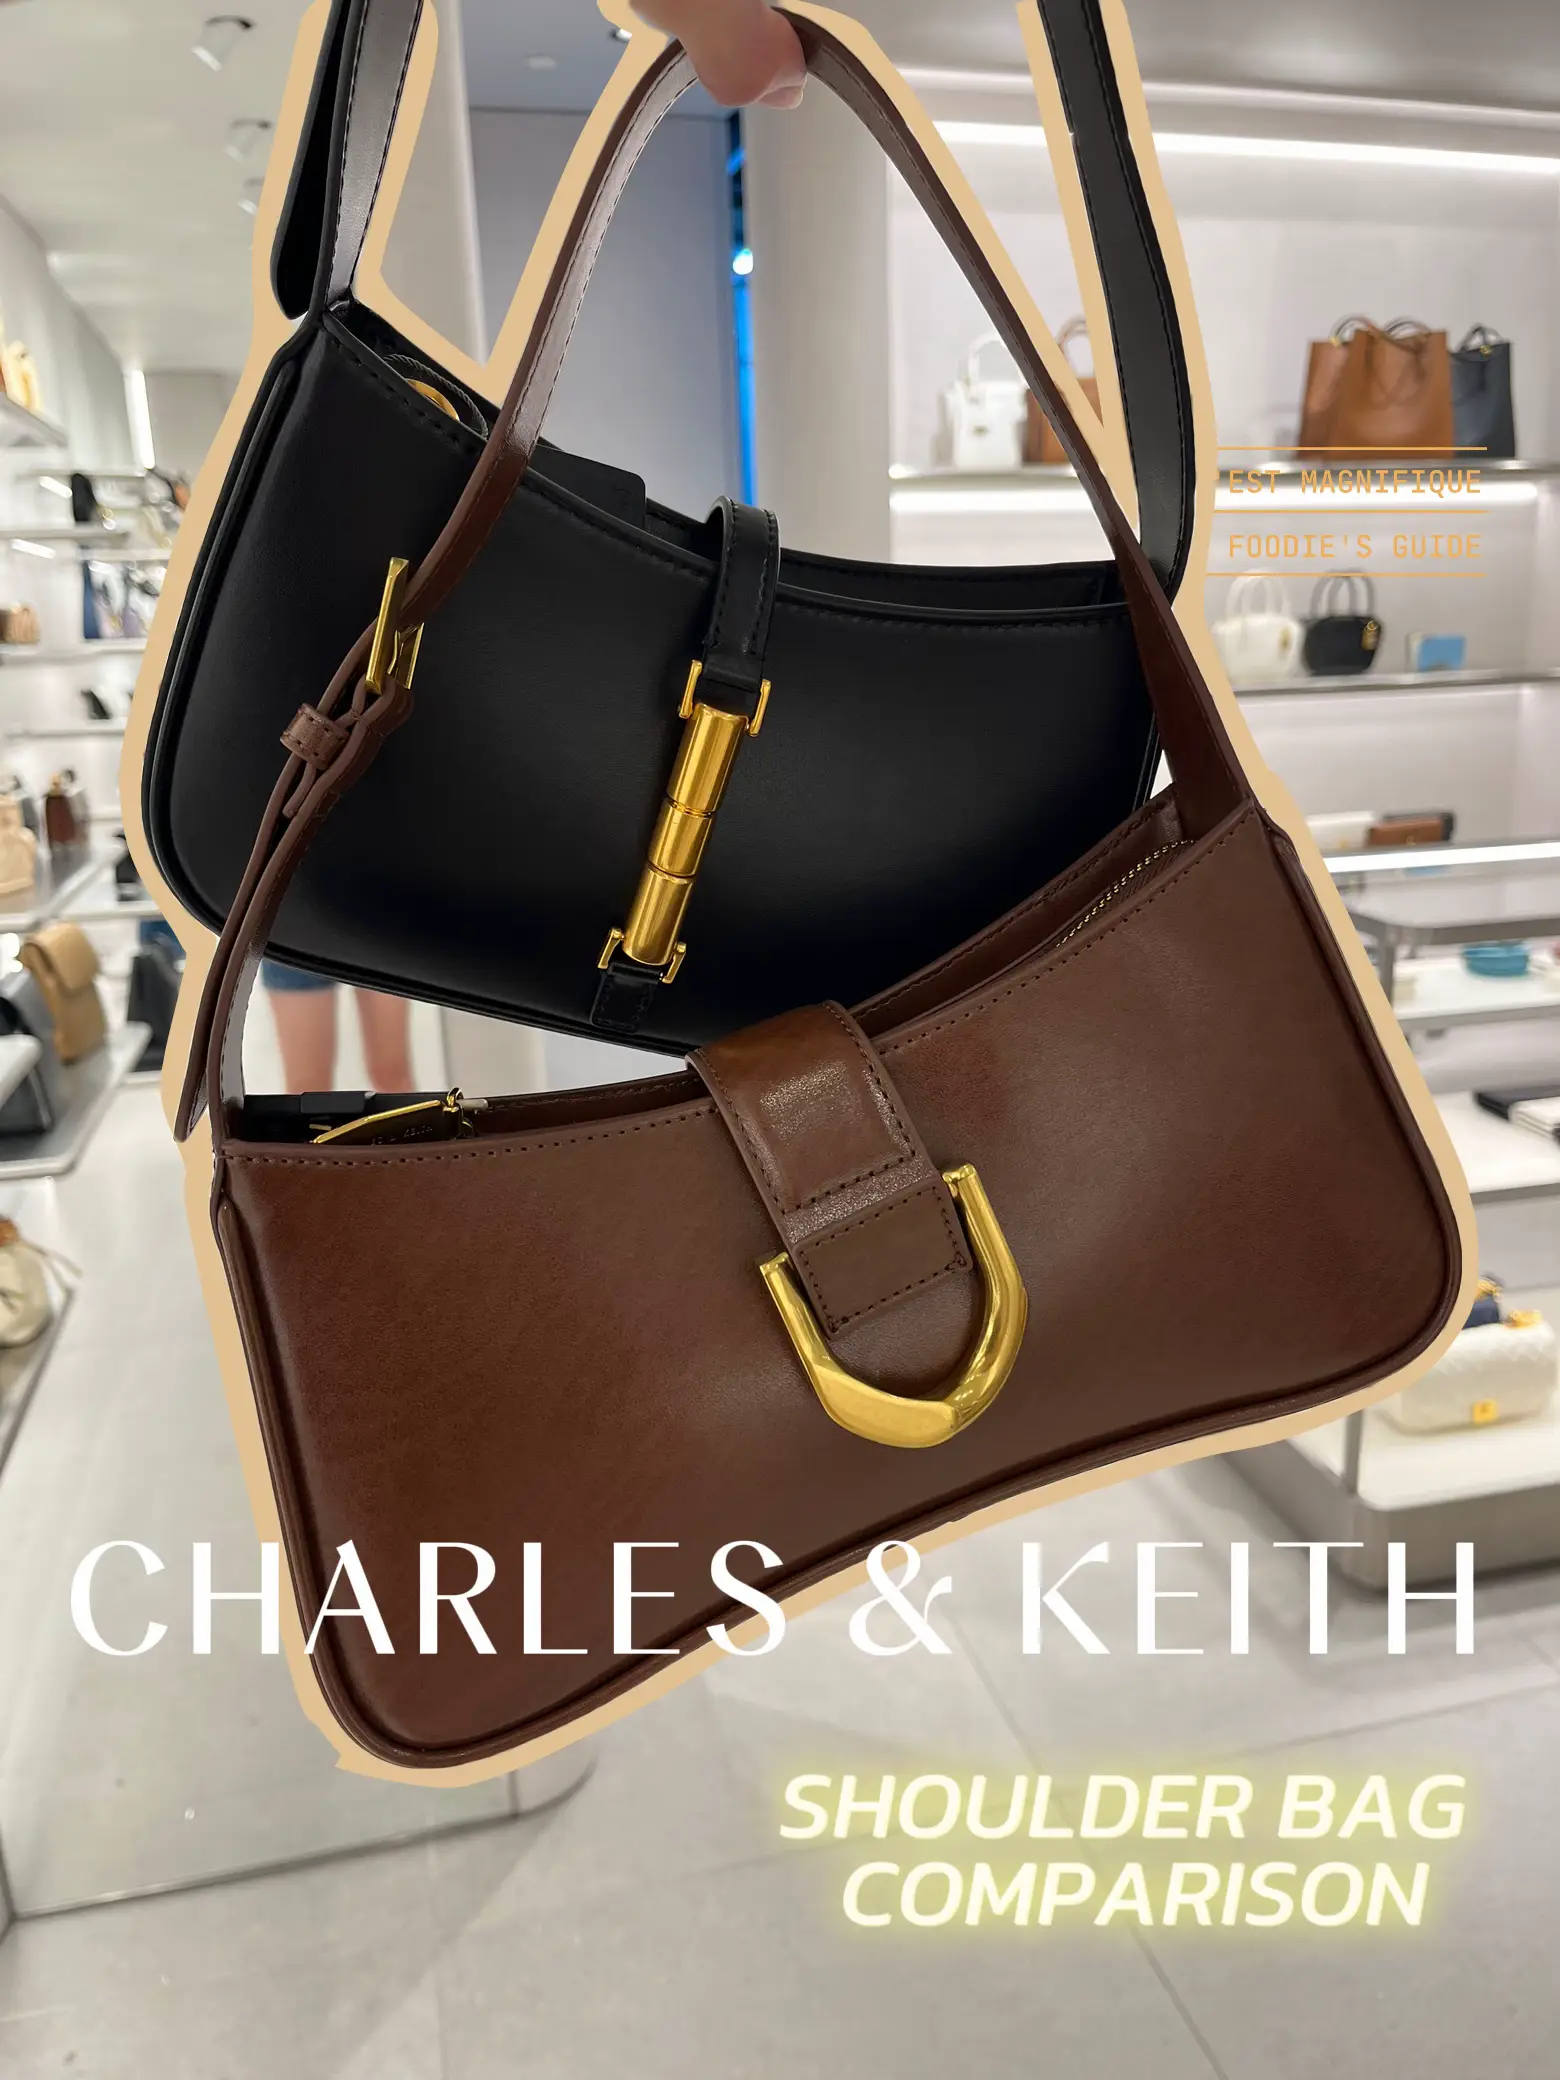 Charles & Keith - Women's Cesia Chain Strap Bag, Black, S